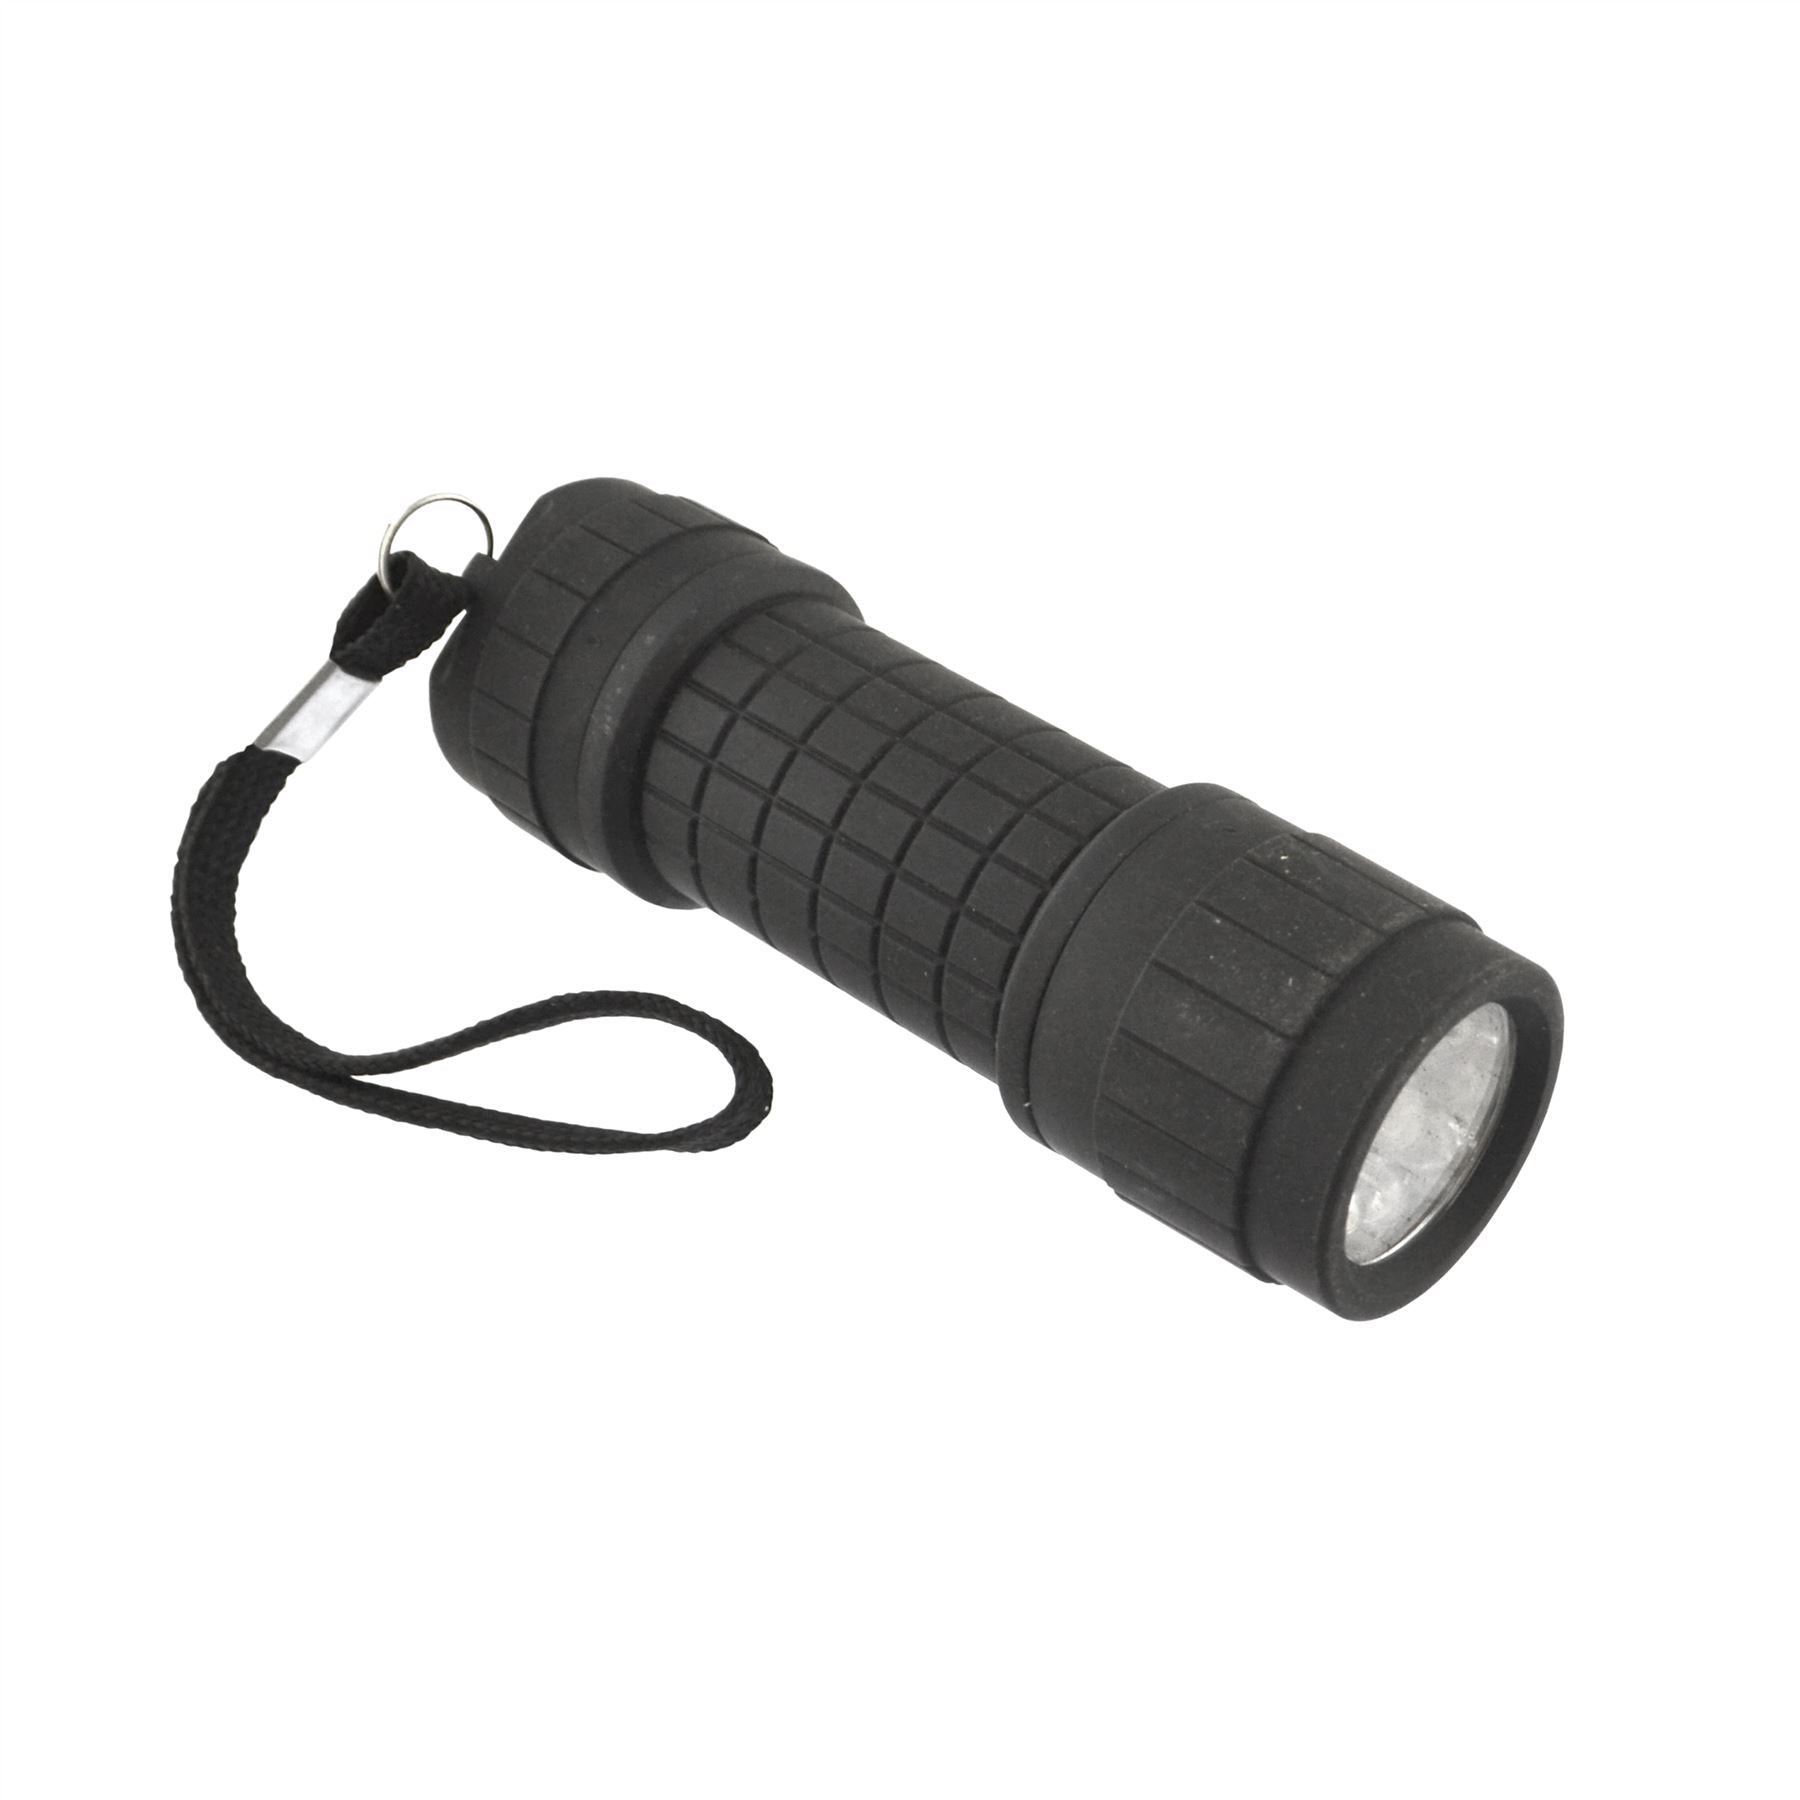 9 LED Black Torch Light Mini Flashlight Camping Hiking Rubber Case GAR67